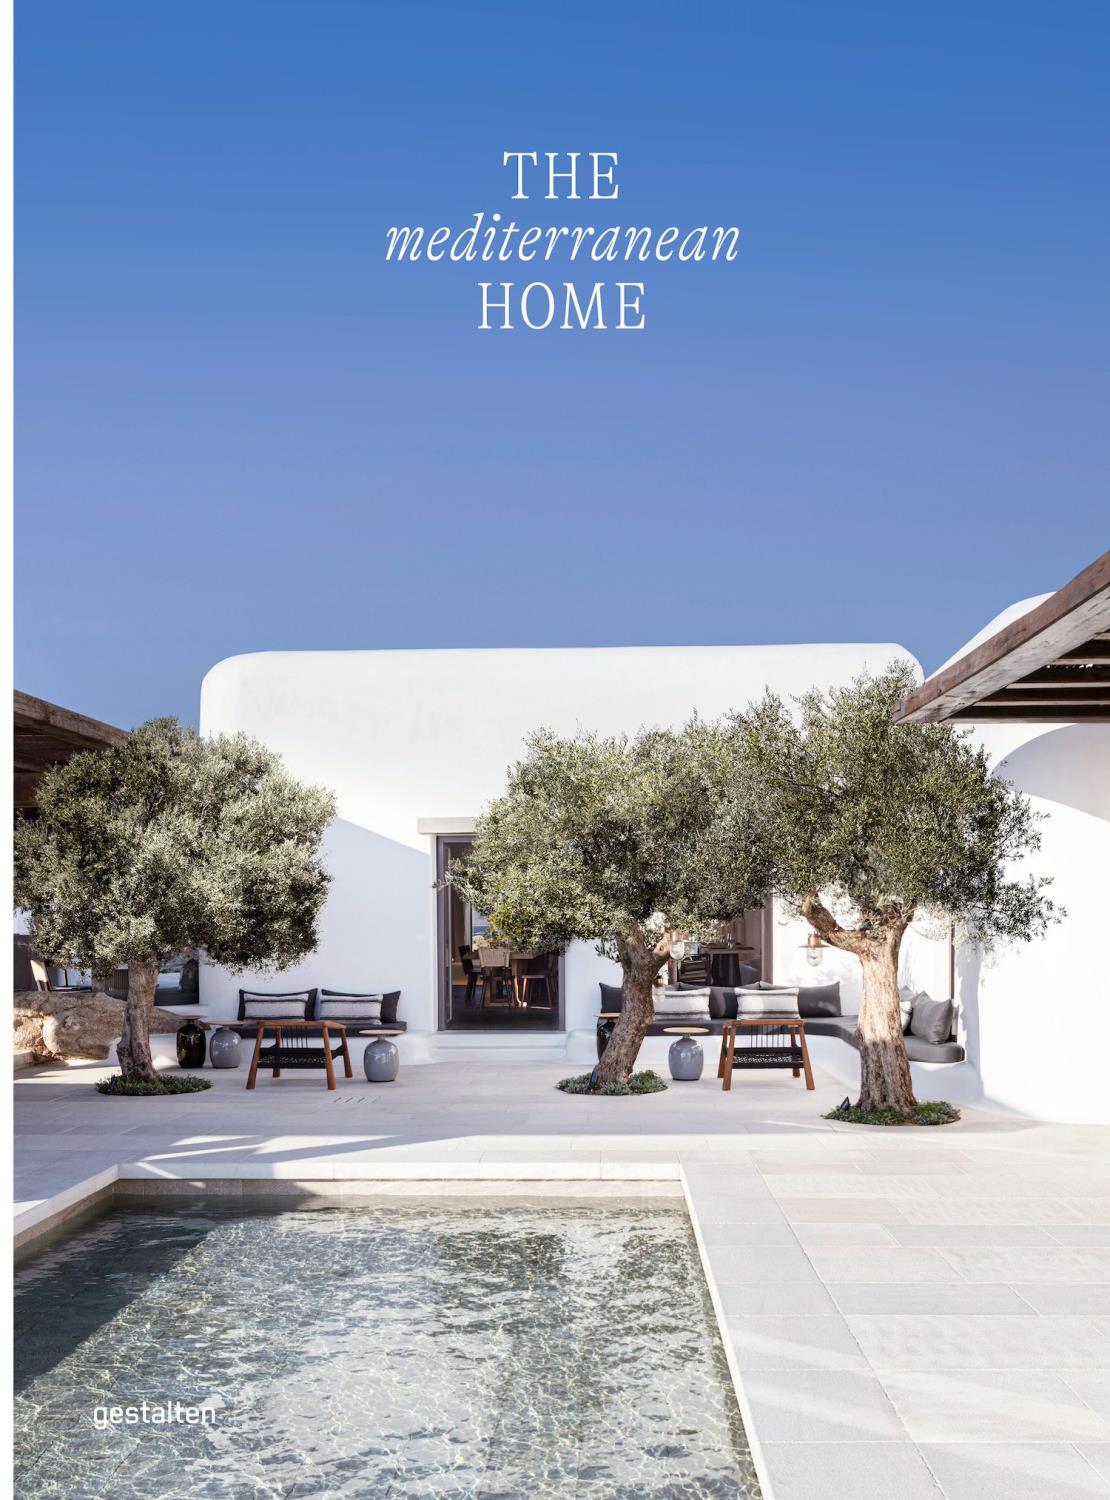 The Mediterranean Home